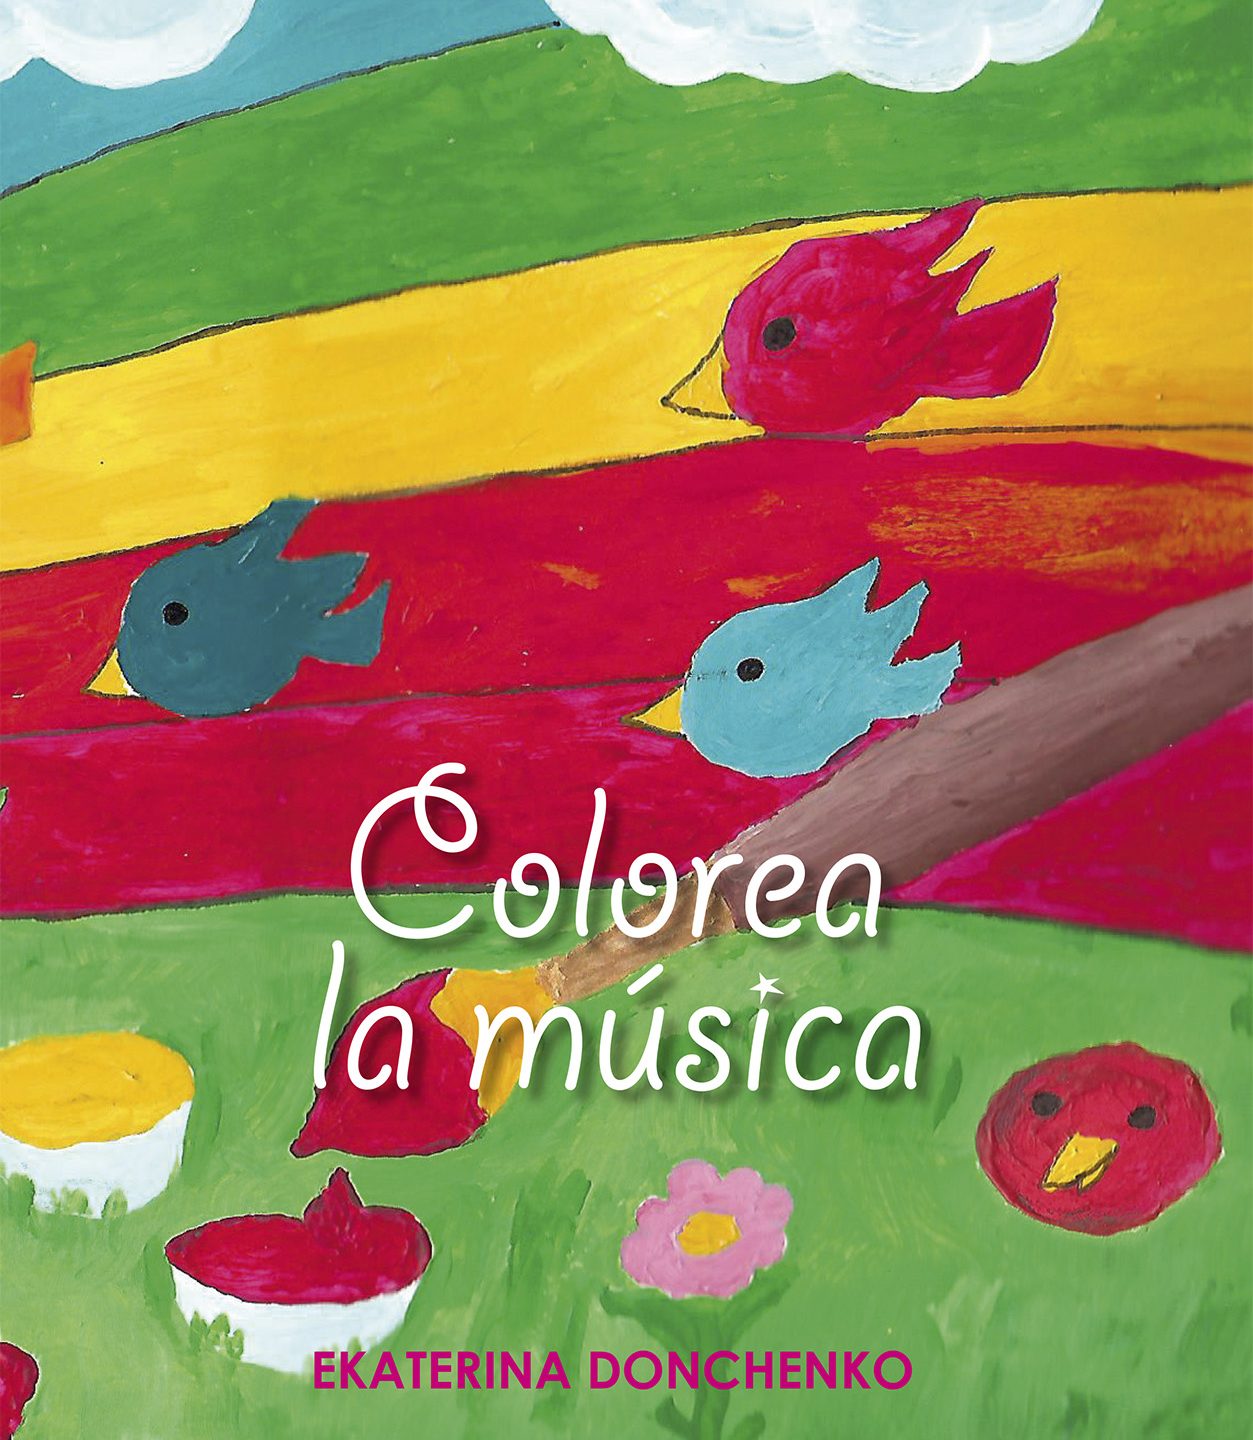 COLOREA LA MÚSICA (Spanish version)